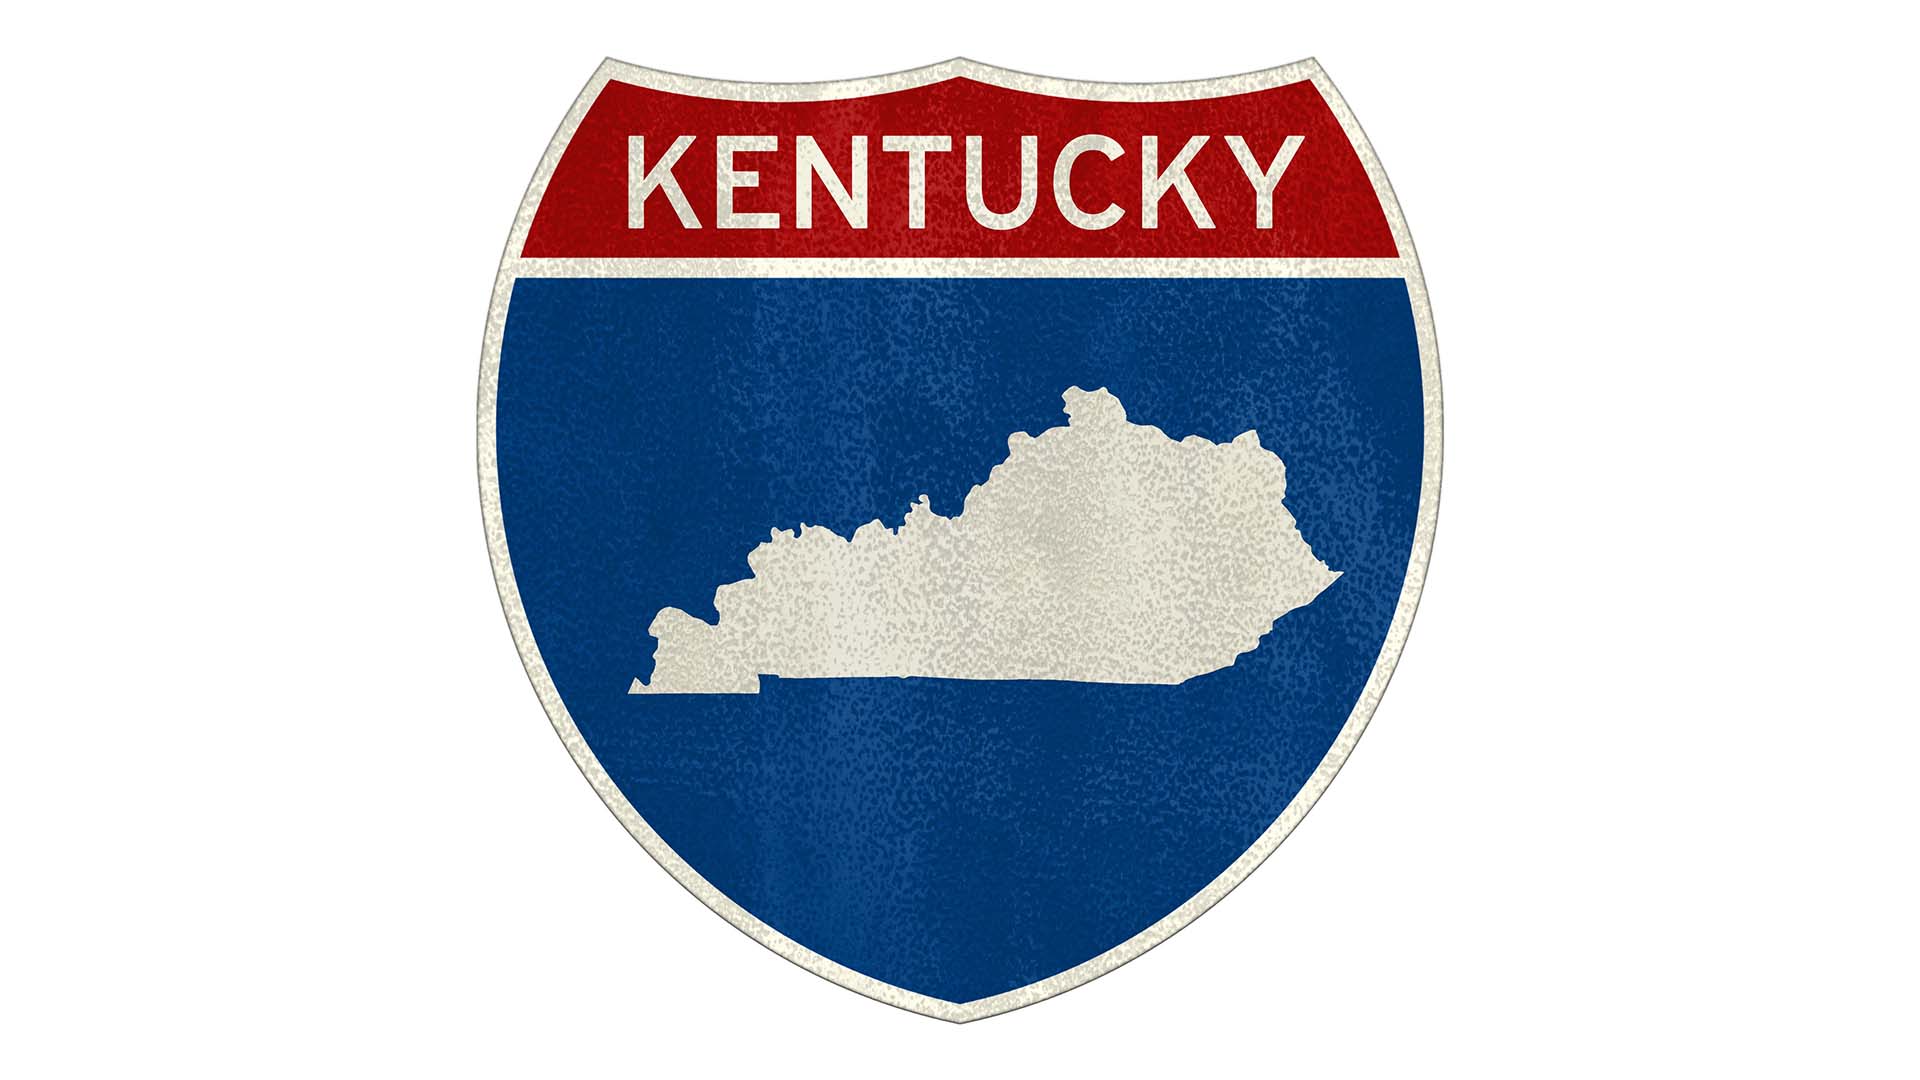 Kentucky state roadside sign